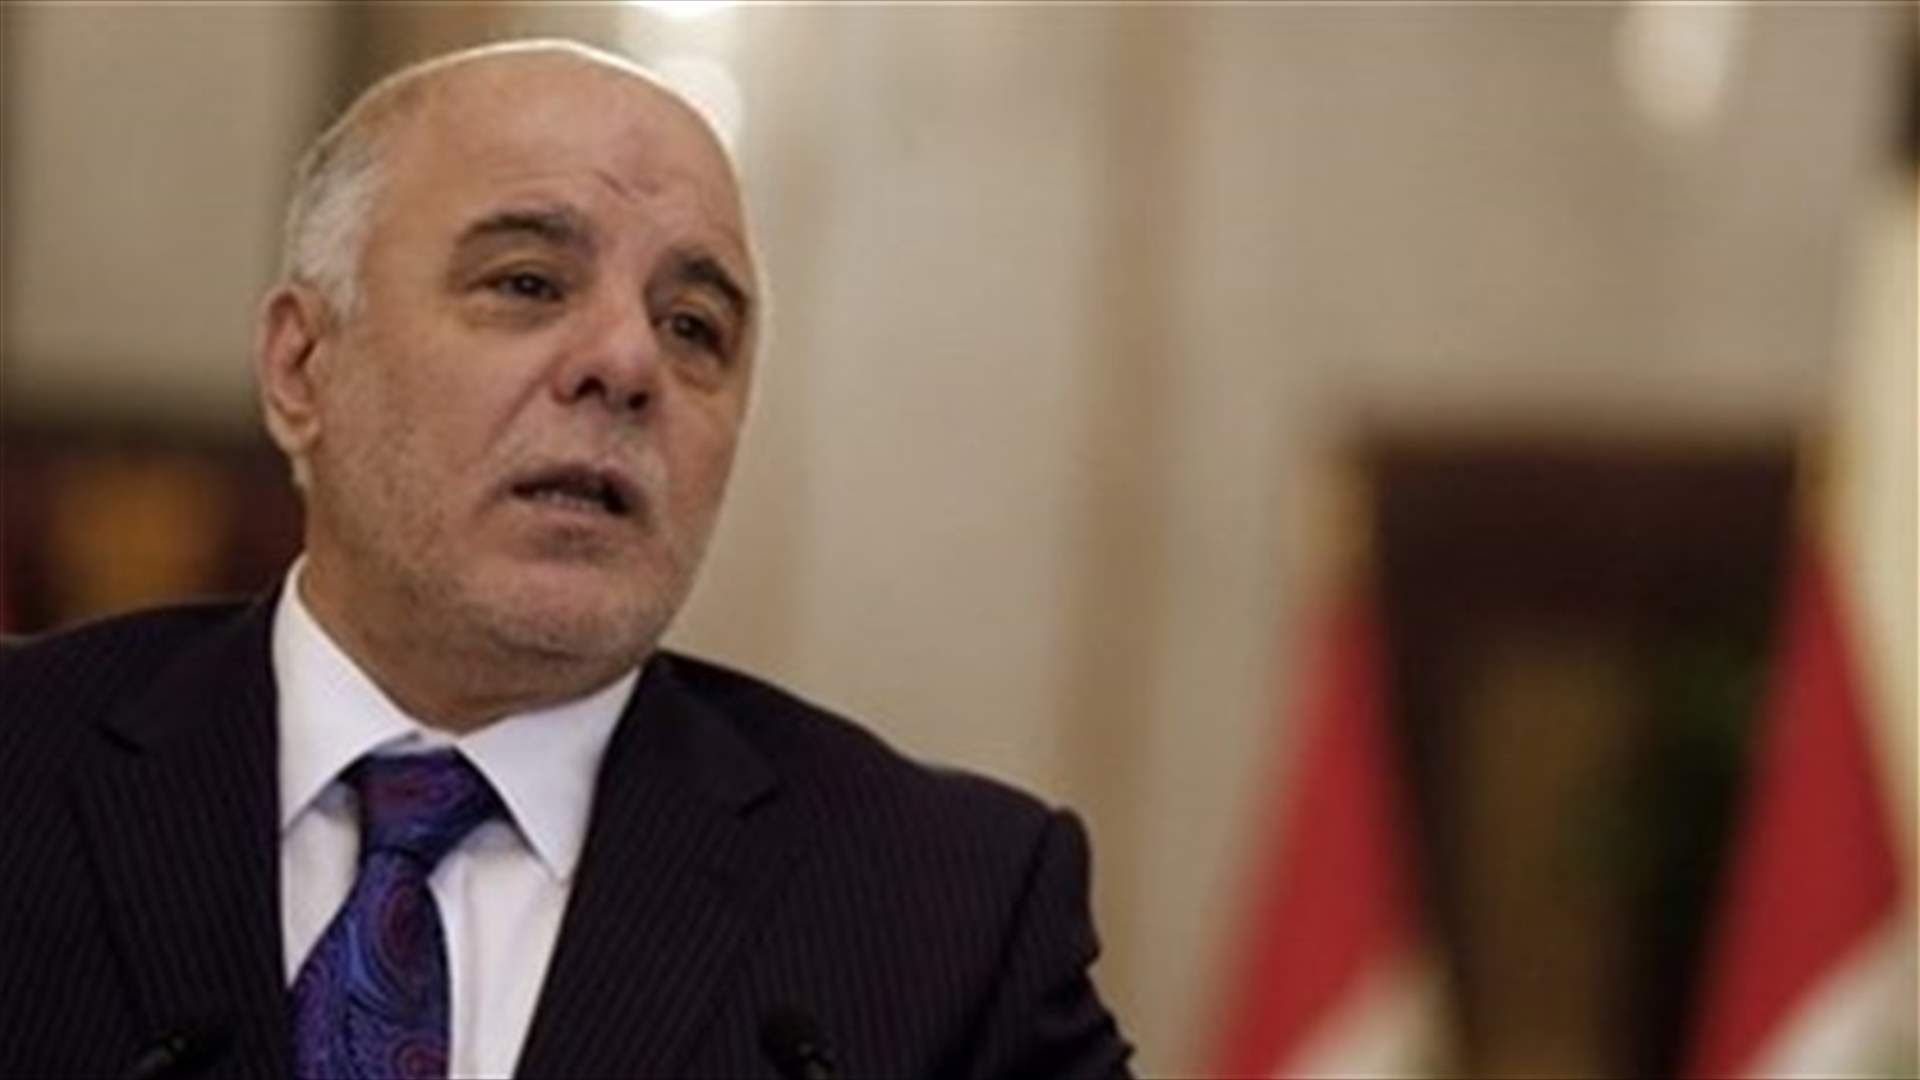 Iraq says will stay clear of US-Iran tensions